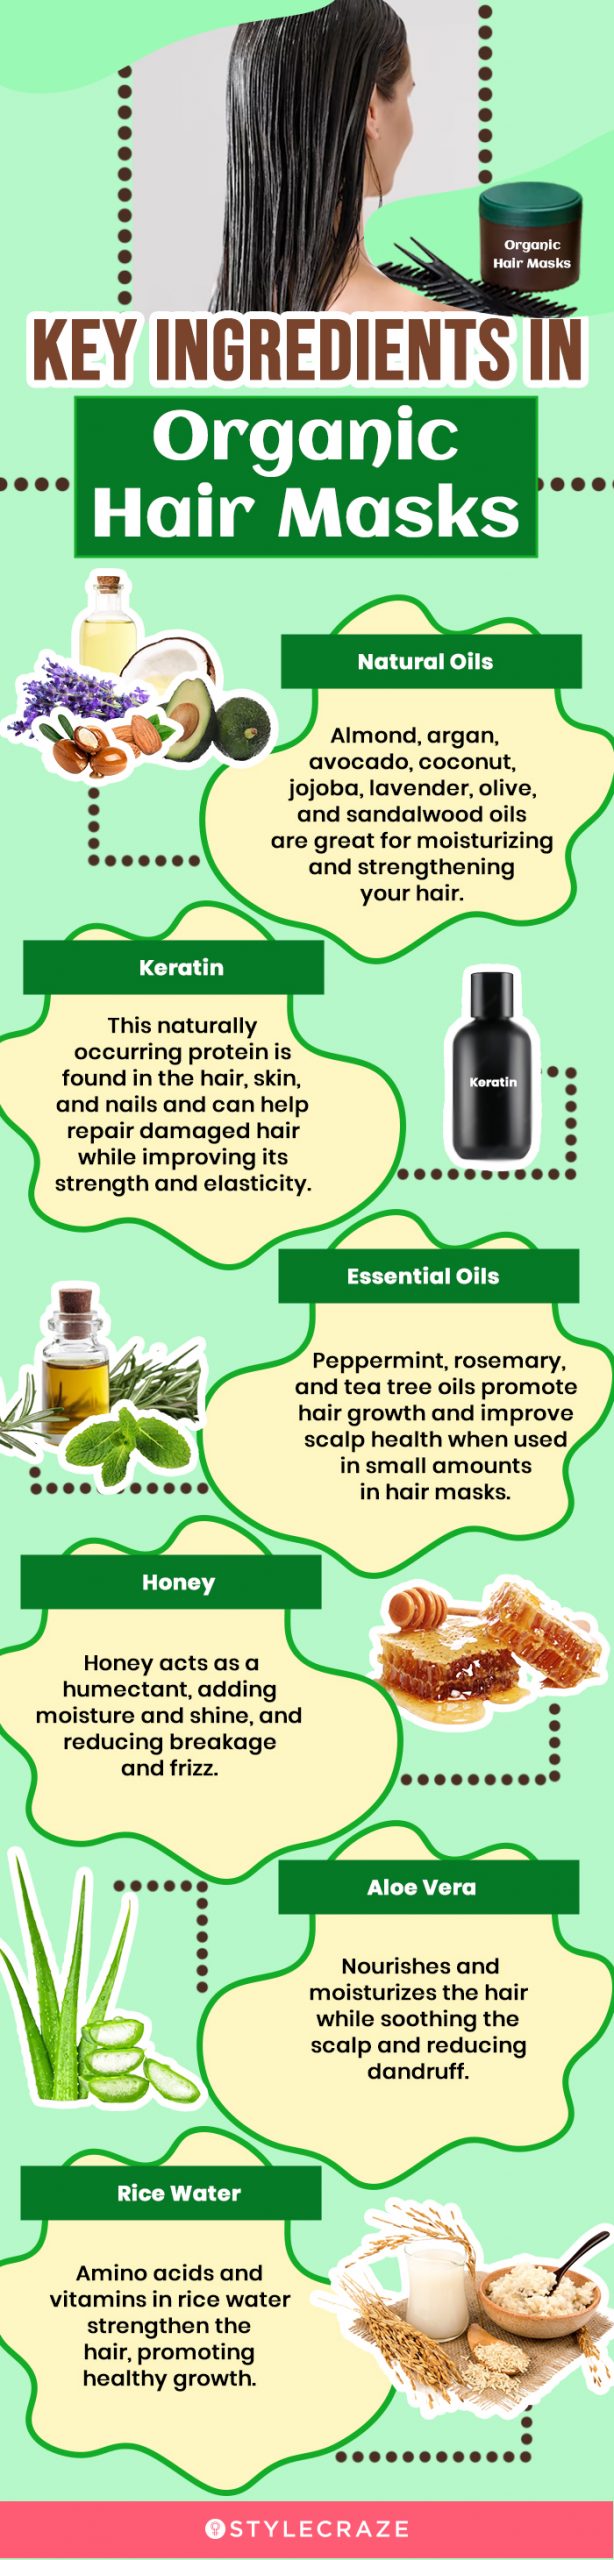 Key Ingredients In Organic Hair Masks (infographic)